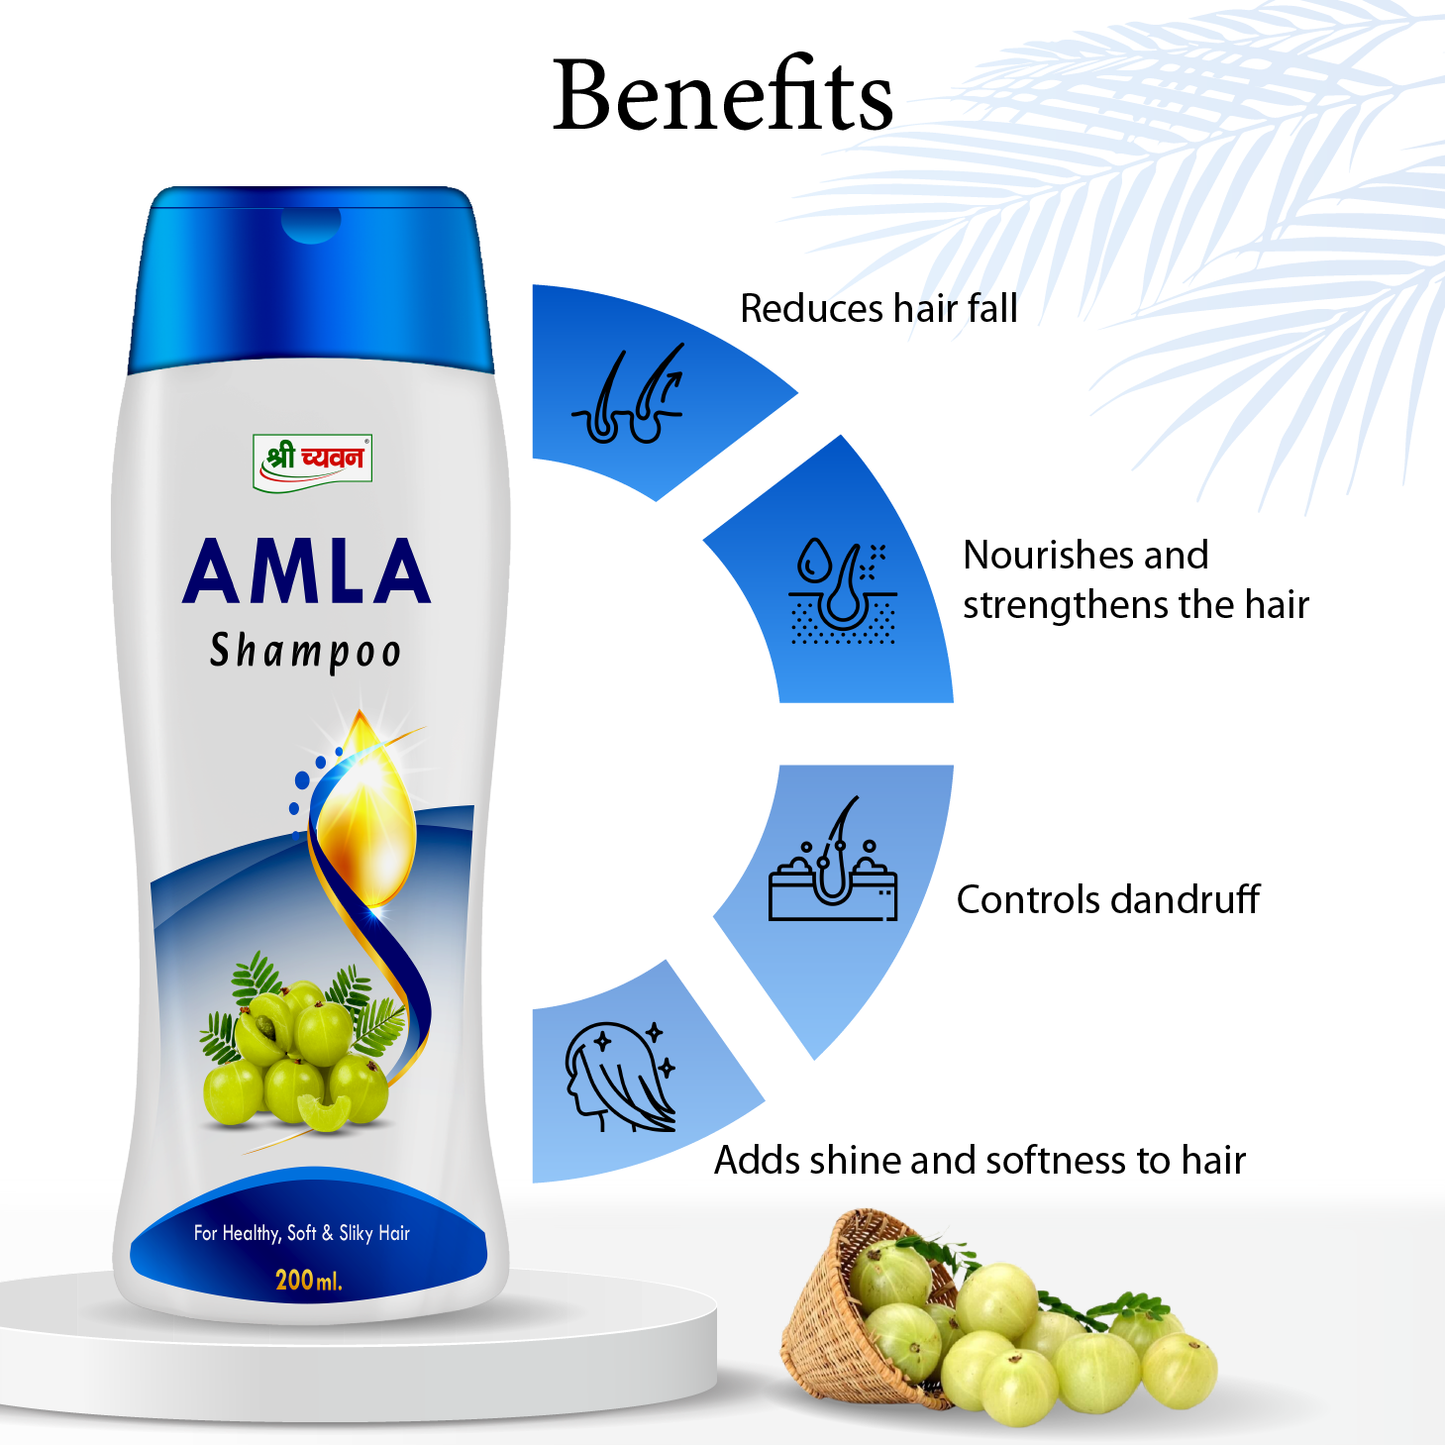 Amla Shampoo Benefits